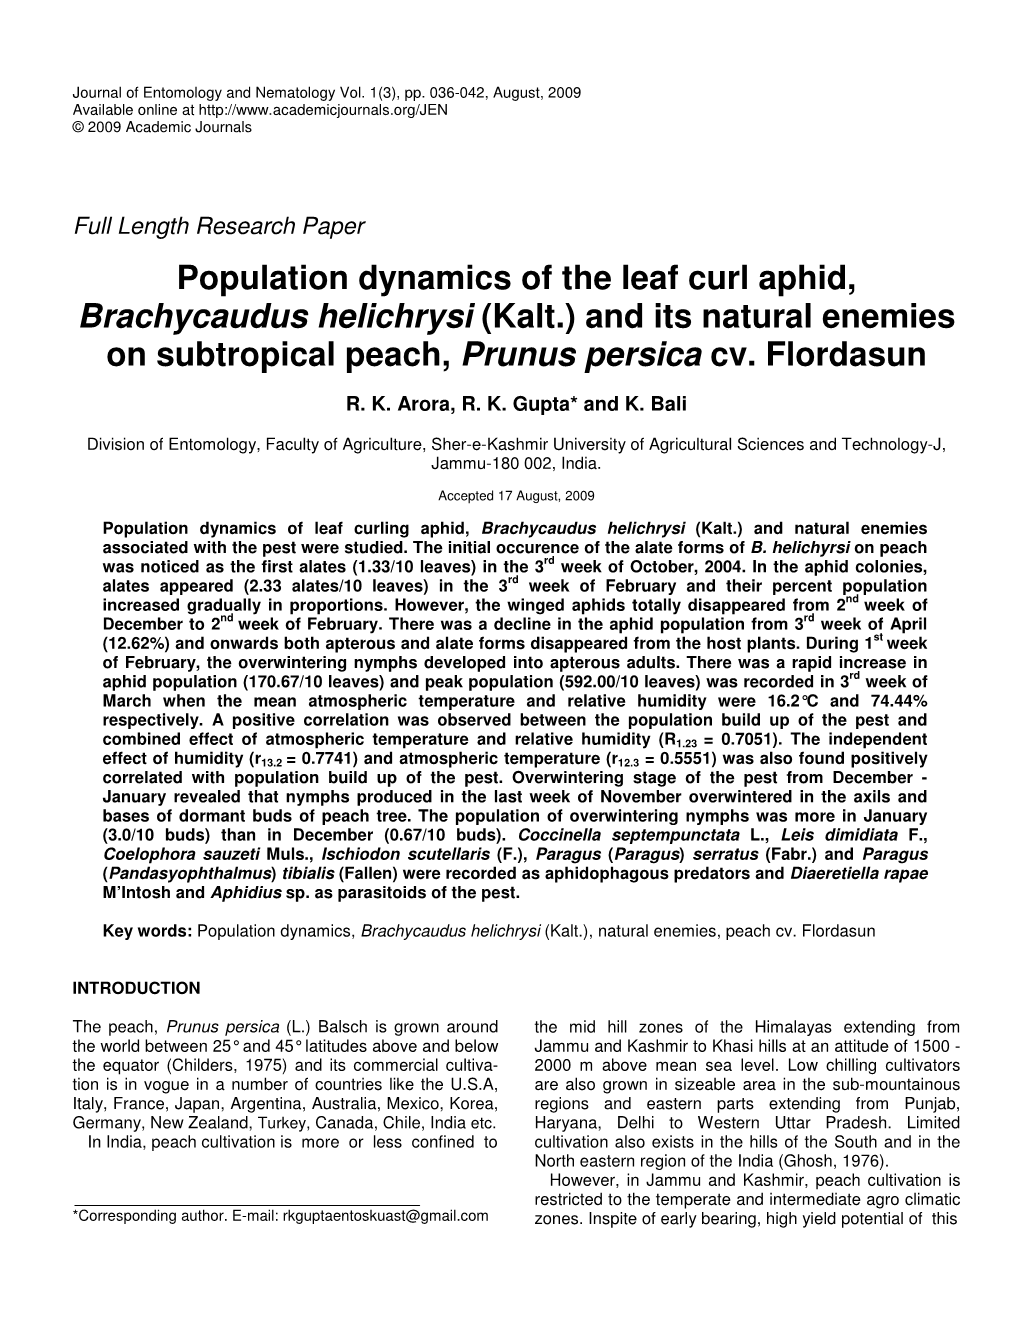 Population Dynamics of the Leaf Curl Aphid, Brachycaudus Helichrysi (Kalt.) and Its Natural Enemies on Subtropical Peach, Prunus Persica Cv